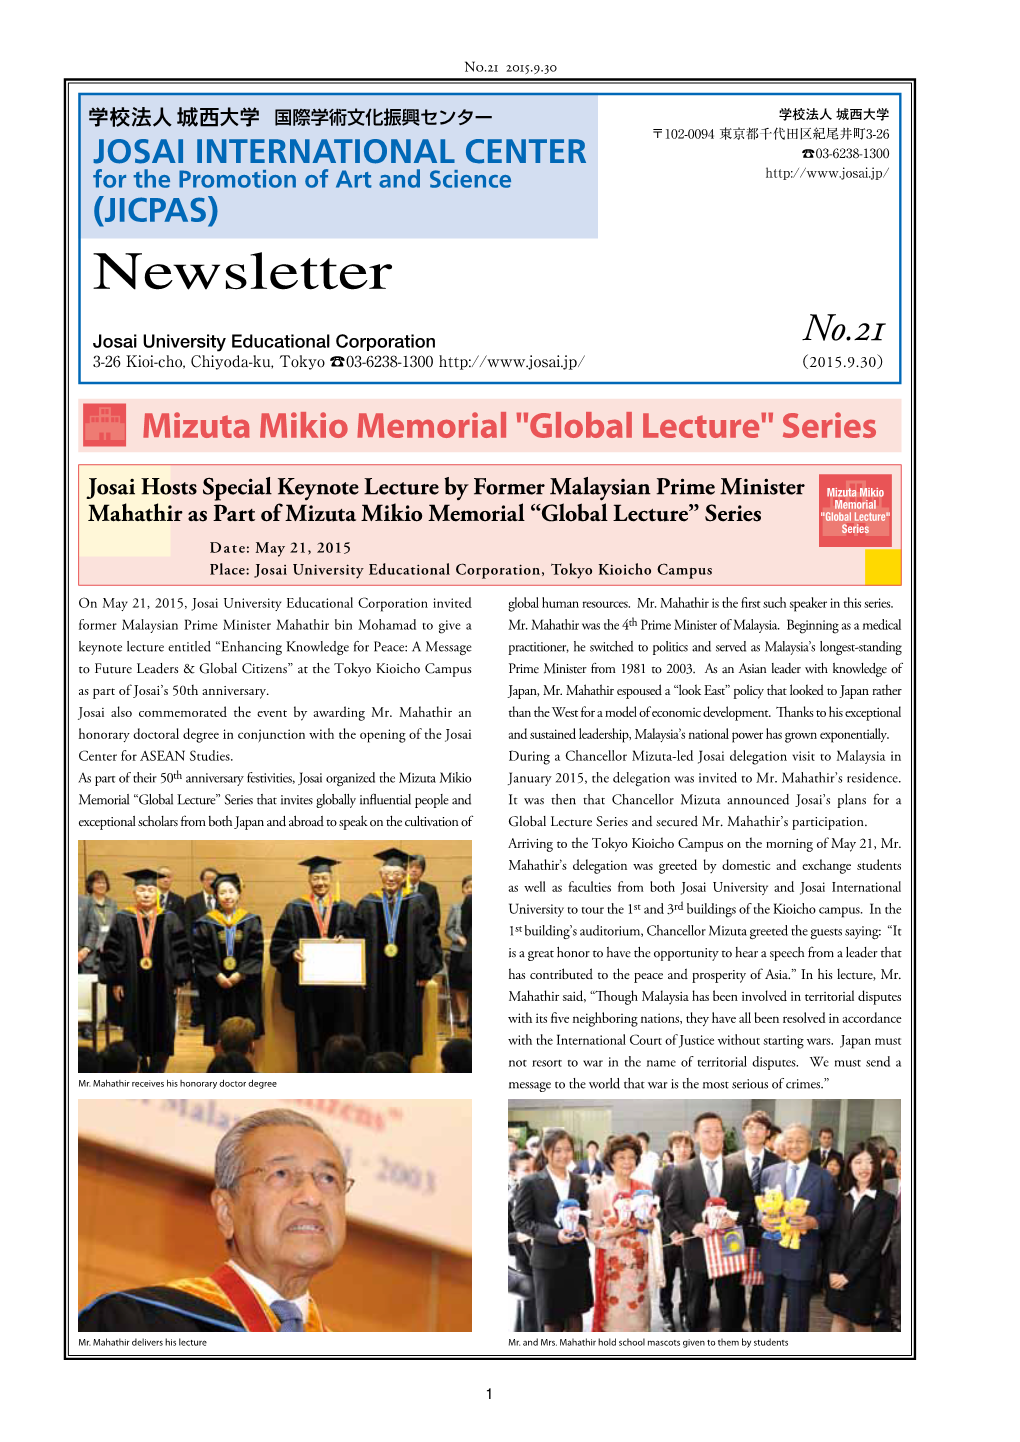 Mizuta Mikio Memorial "Global Lecture" Series